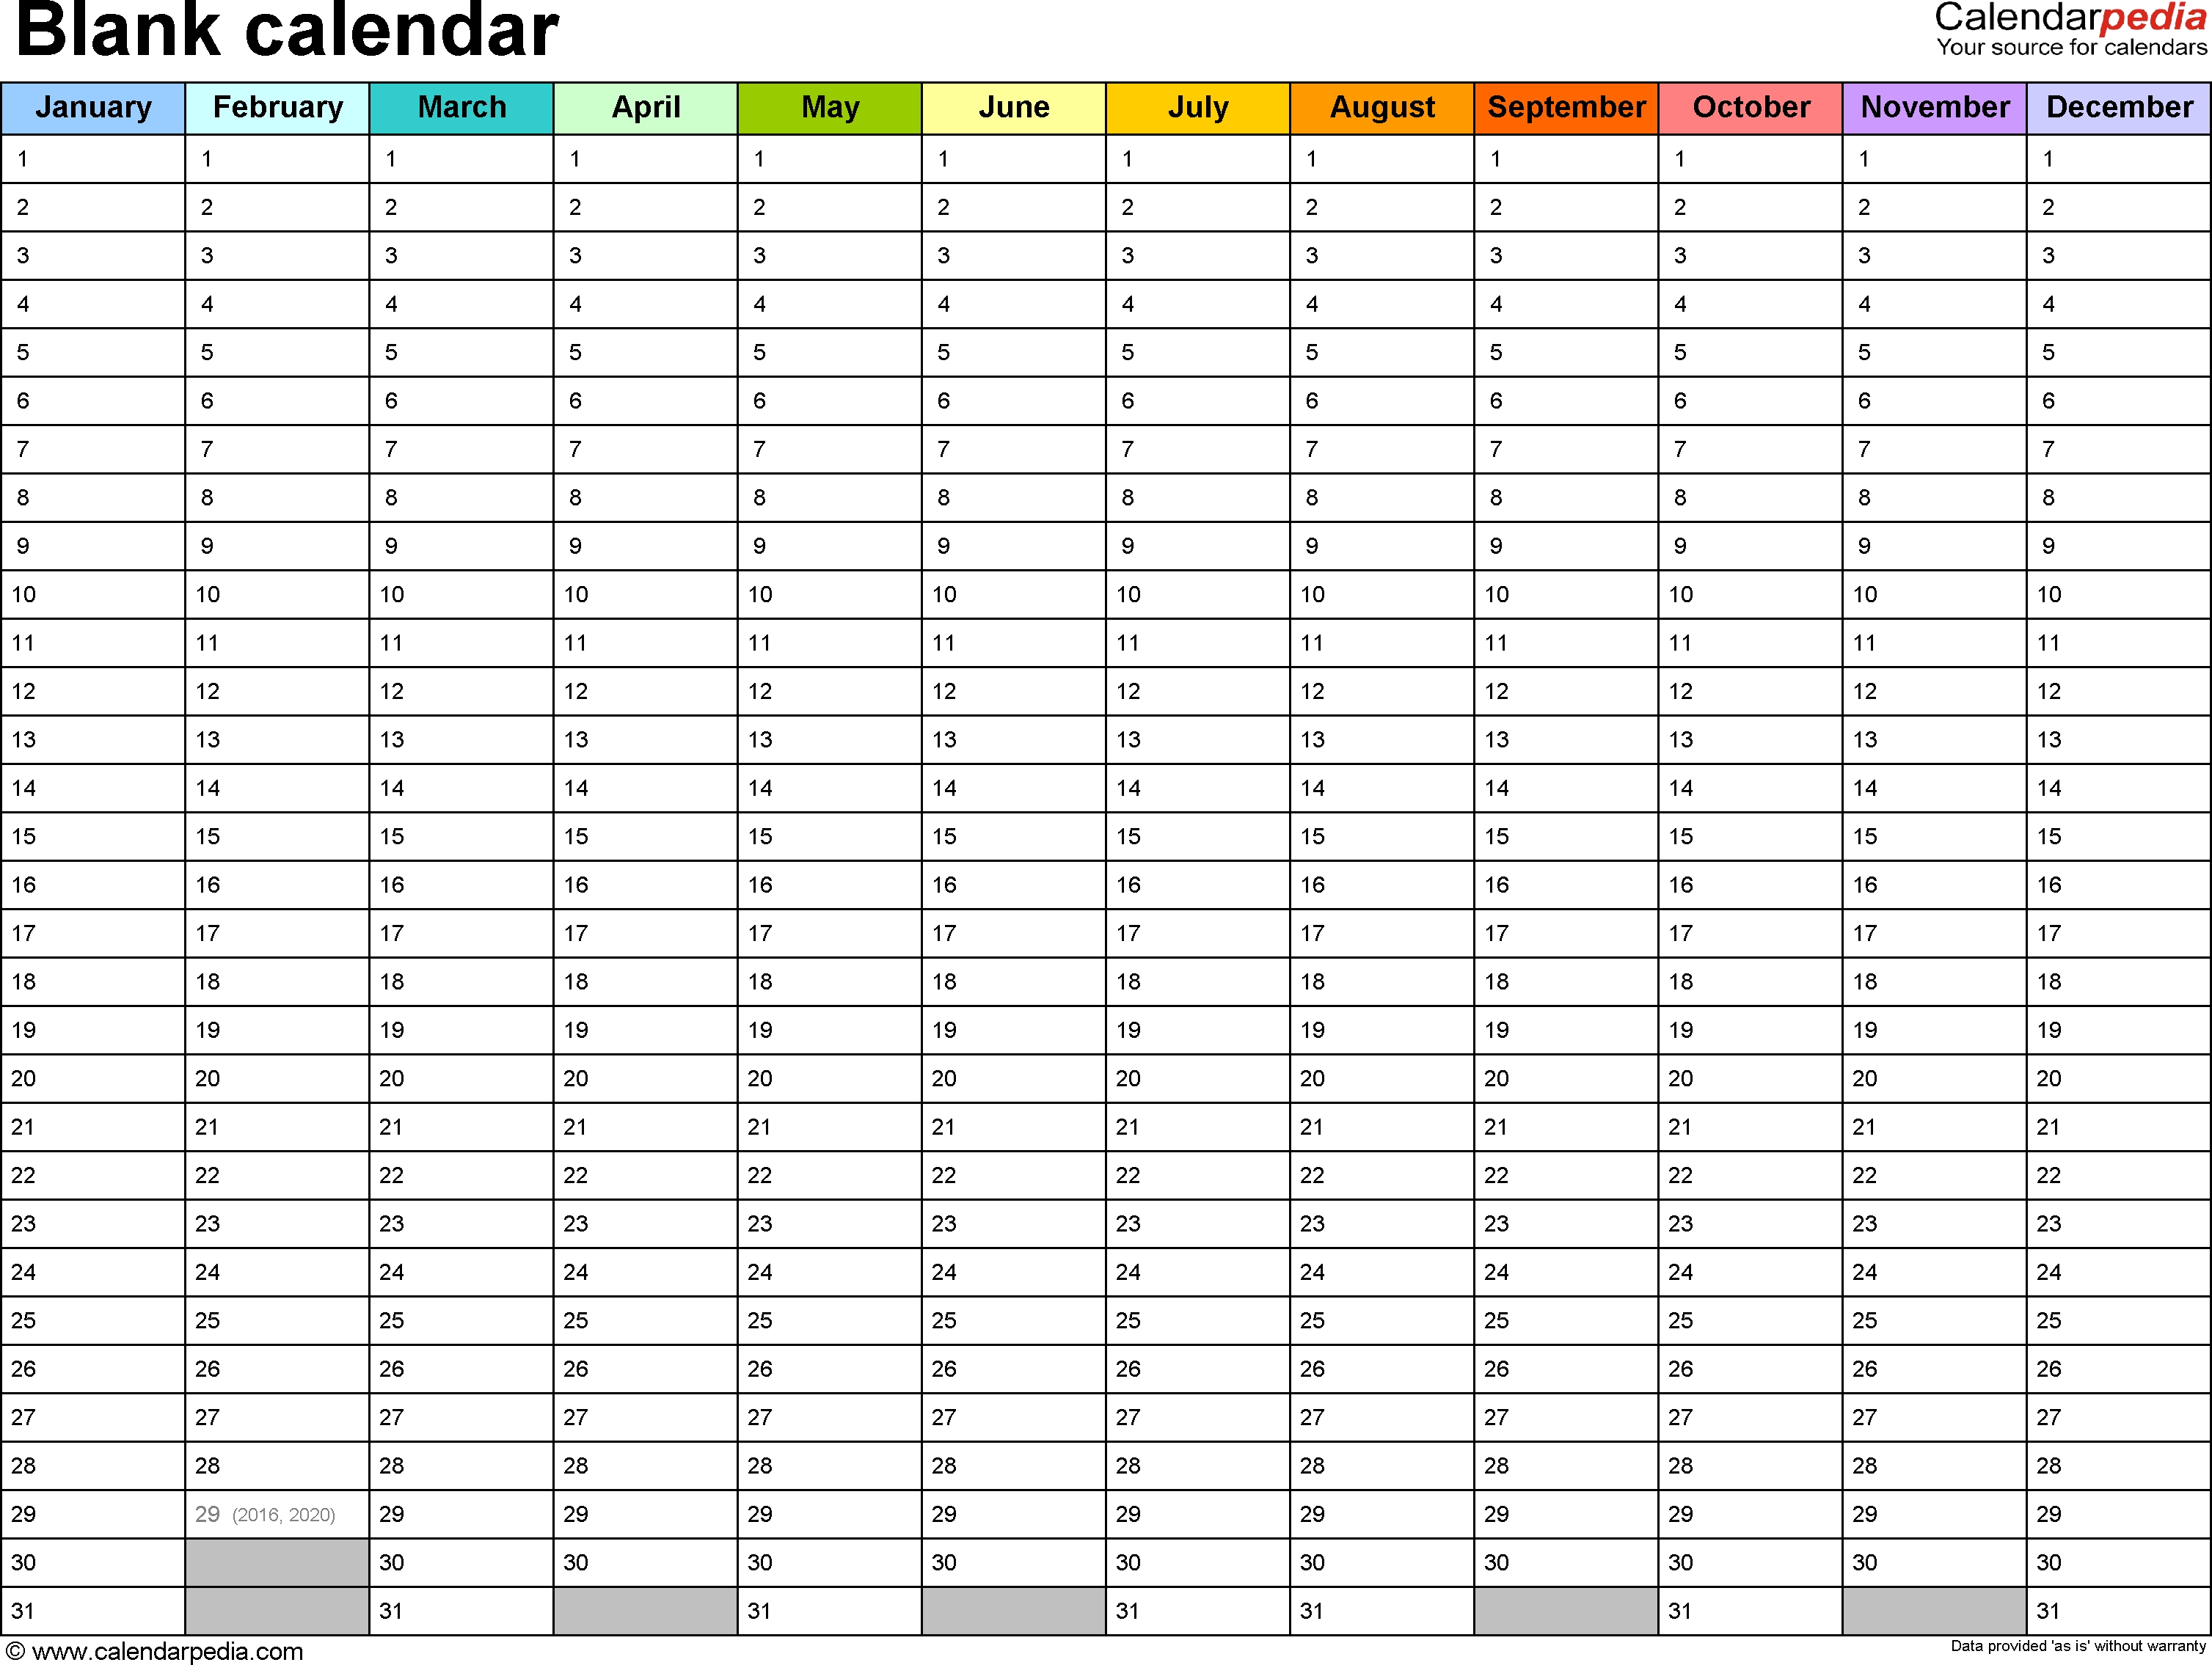 Blank Calendar - 9 Free Printable Microsoft Word Templates Calendar Month View Template